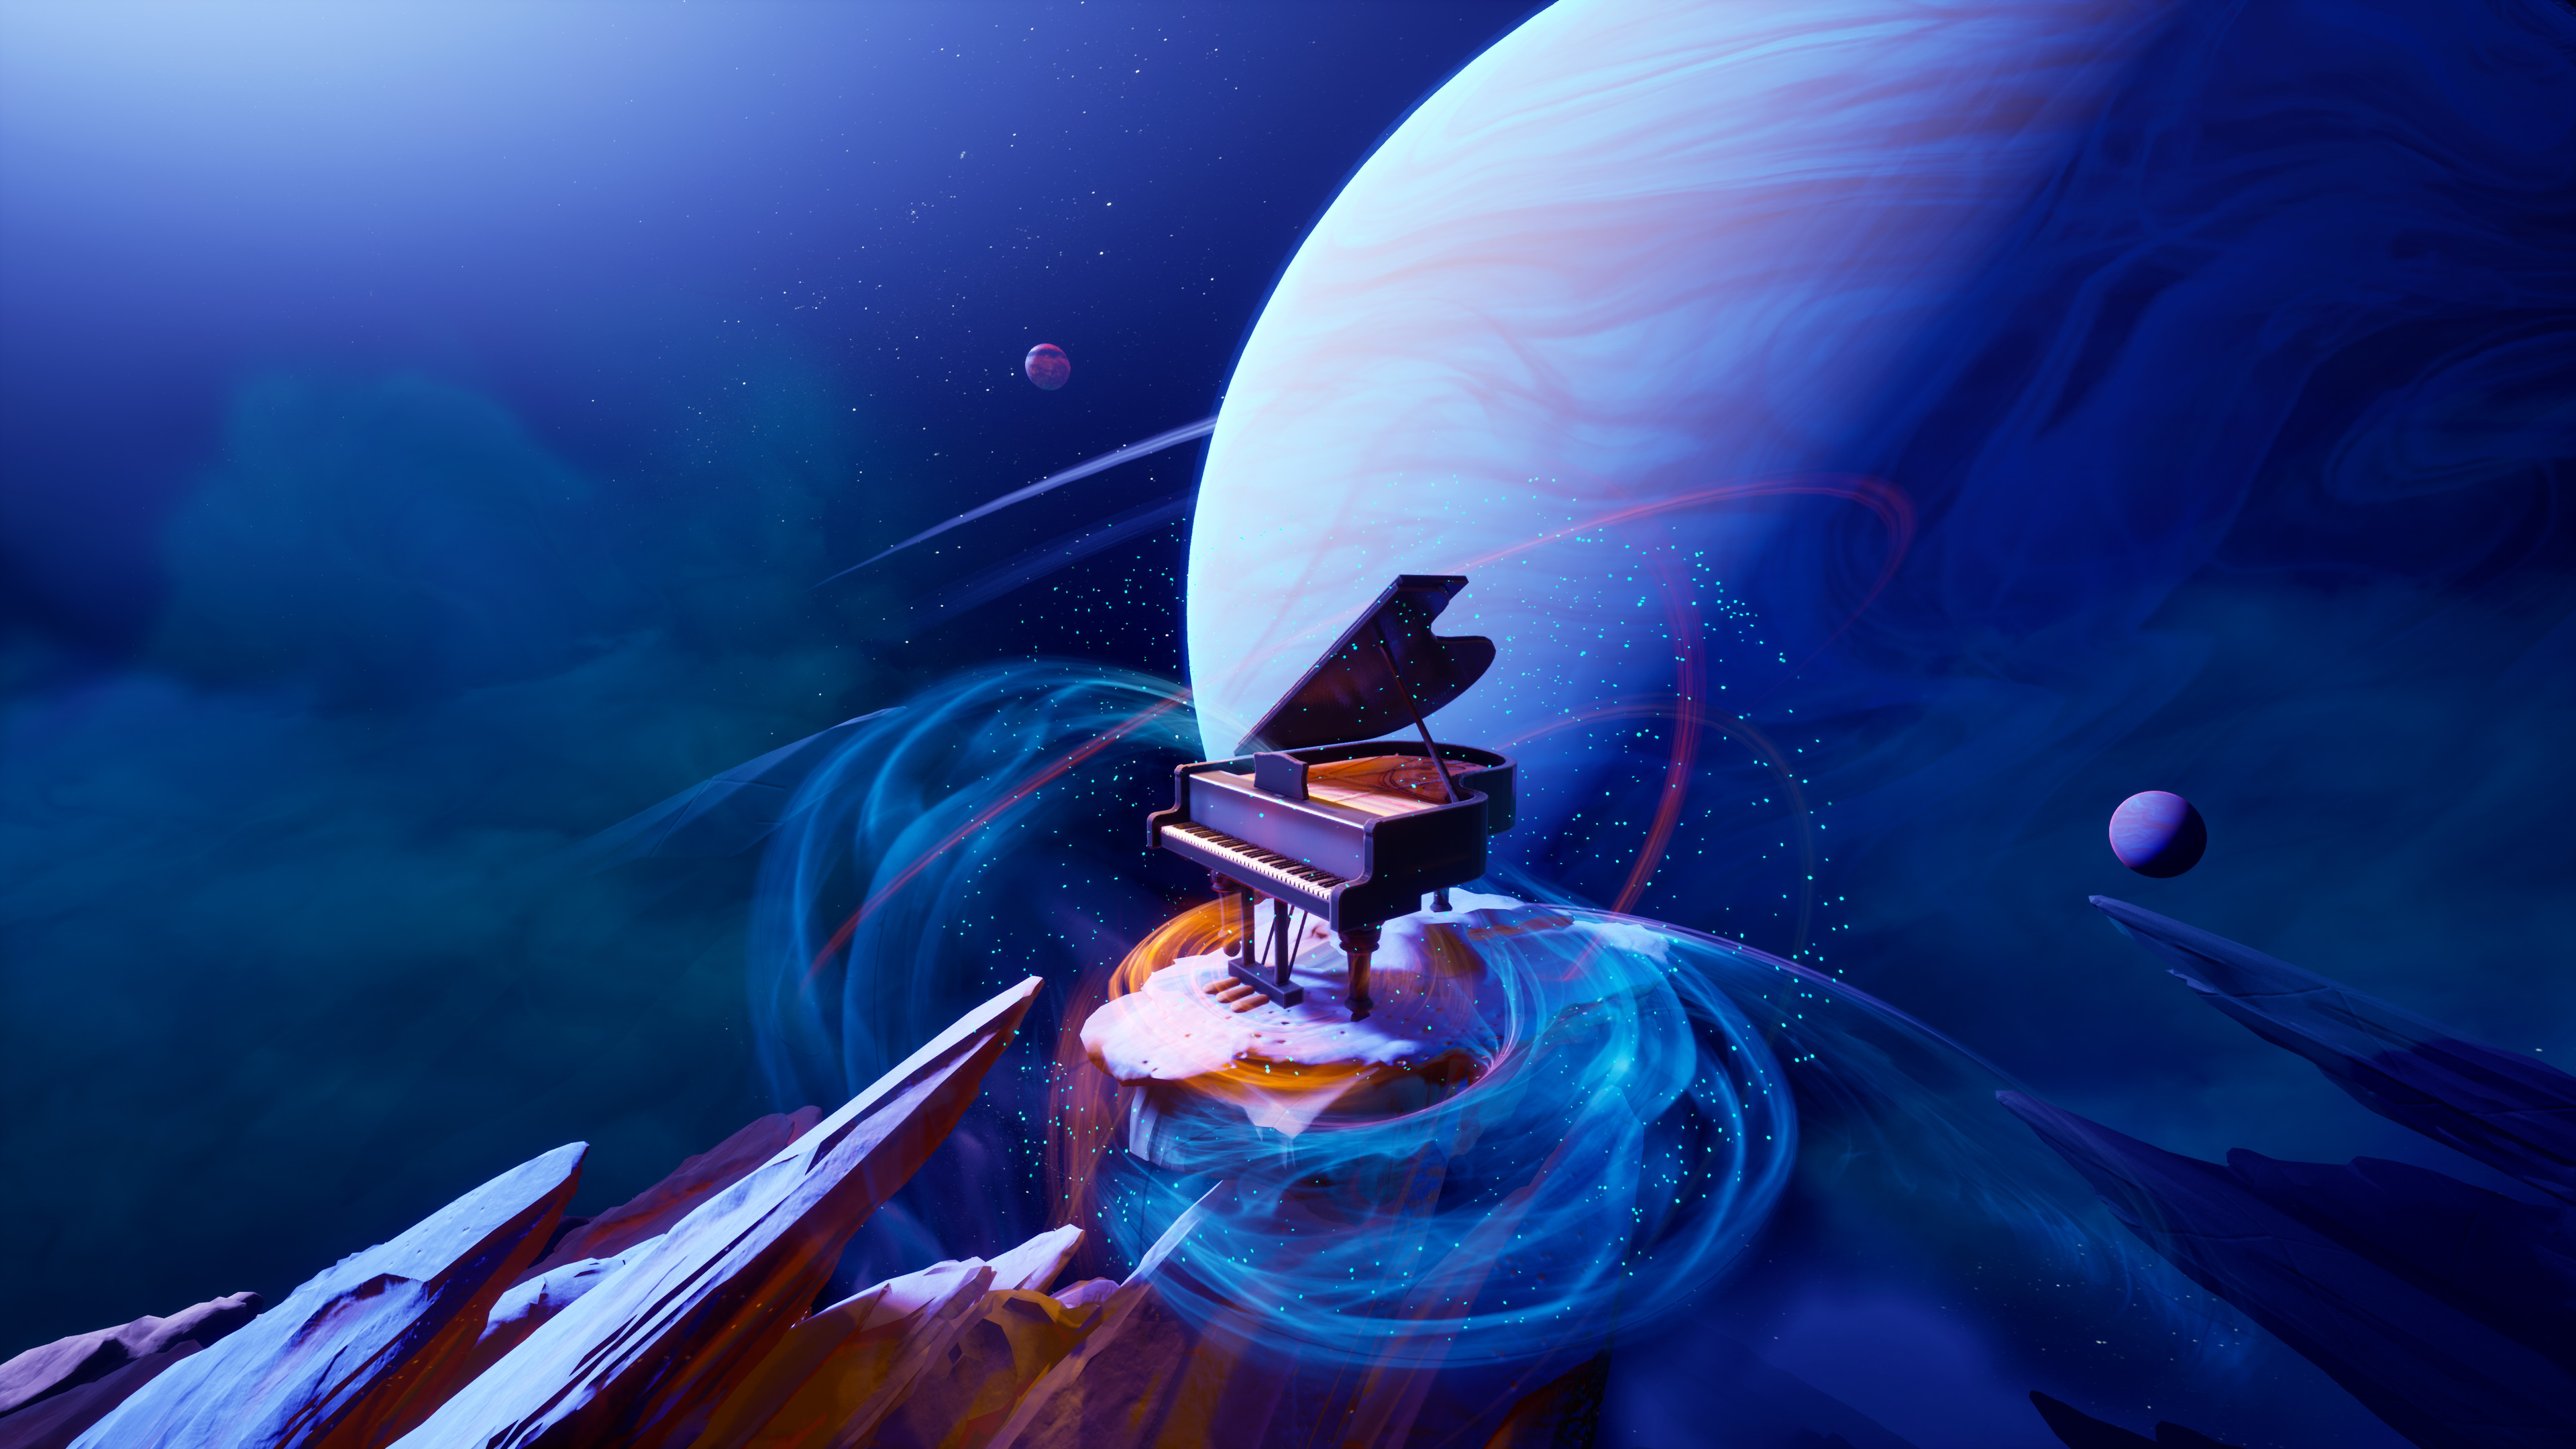 Tyler Smith Digital Art Fantasy Art Piano Grand Piano Space Planet Surreal 3840x2160